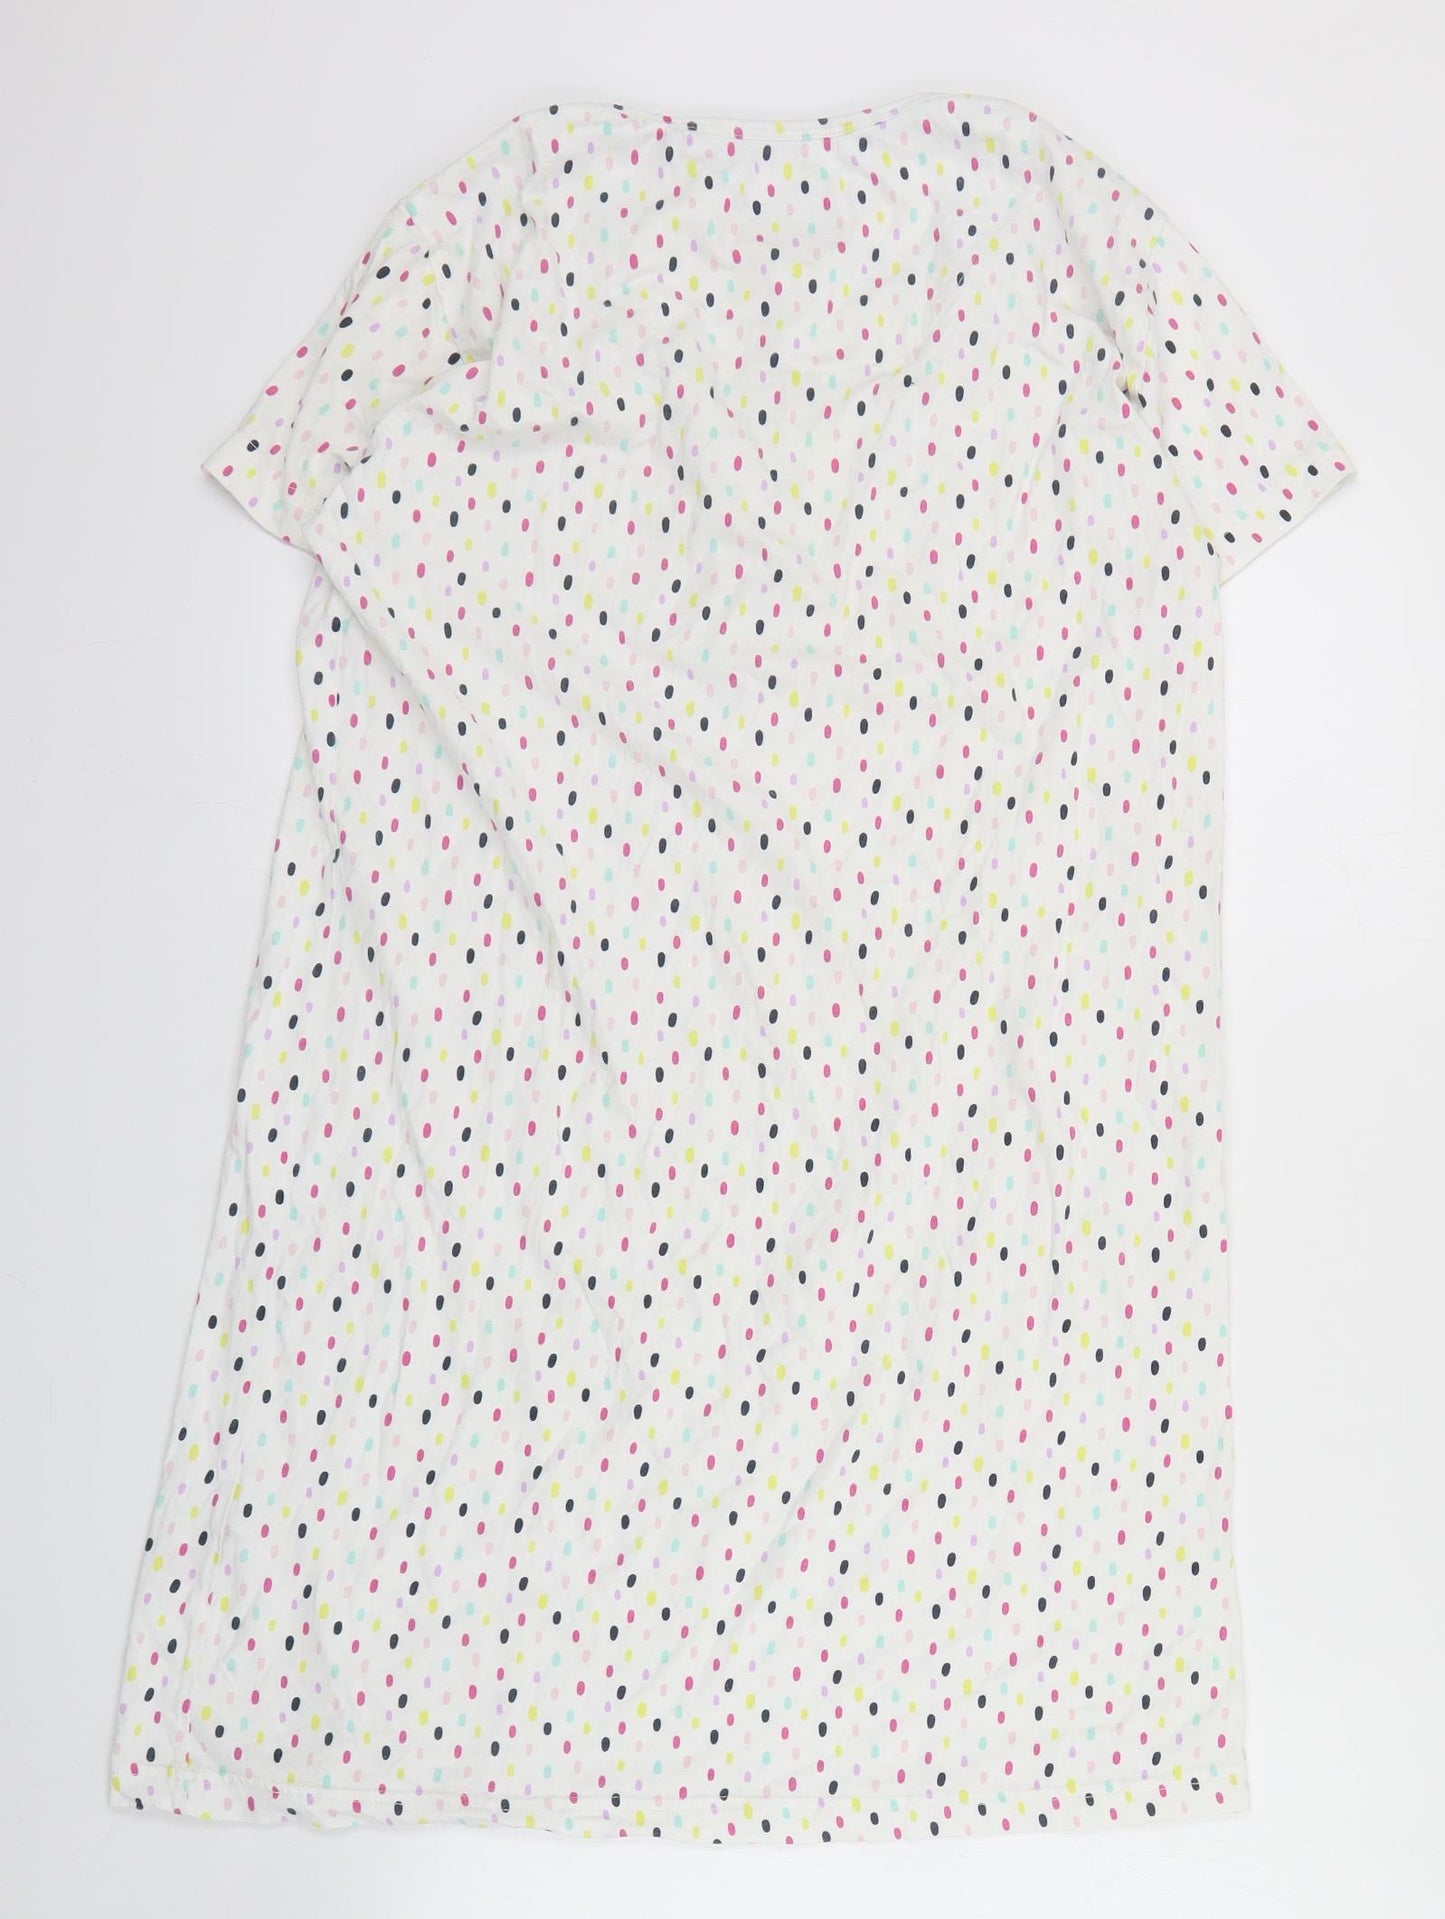 Primark Womens White Polka Dot Cotton Top Dress Size S